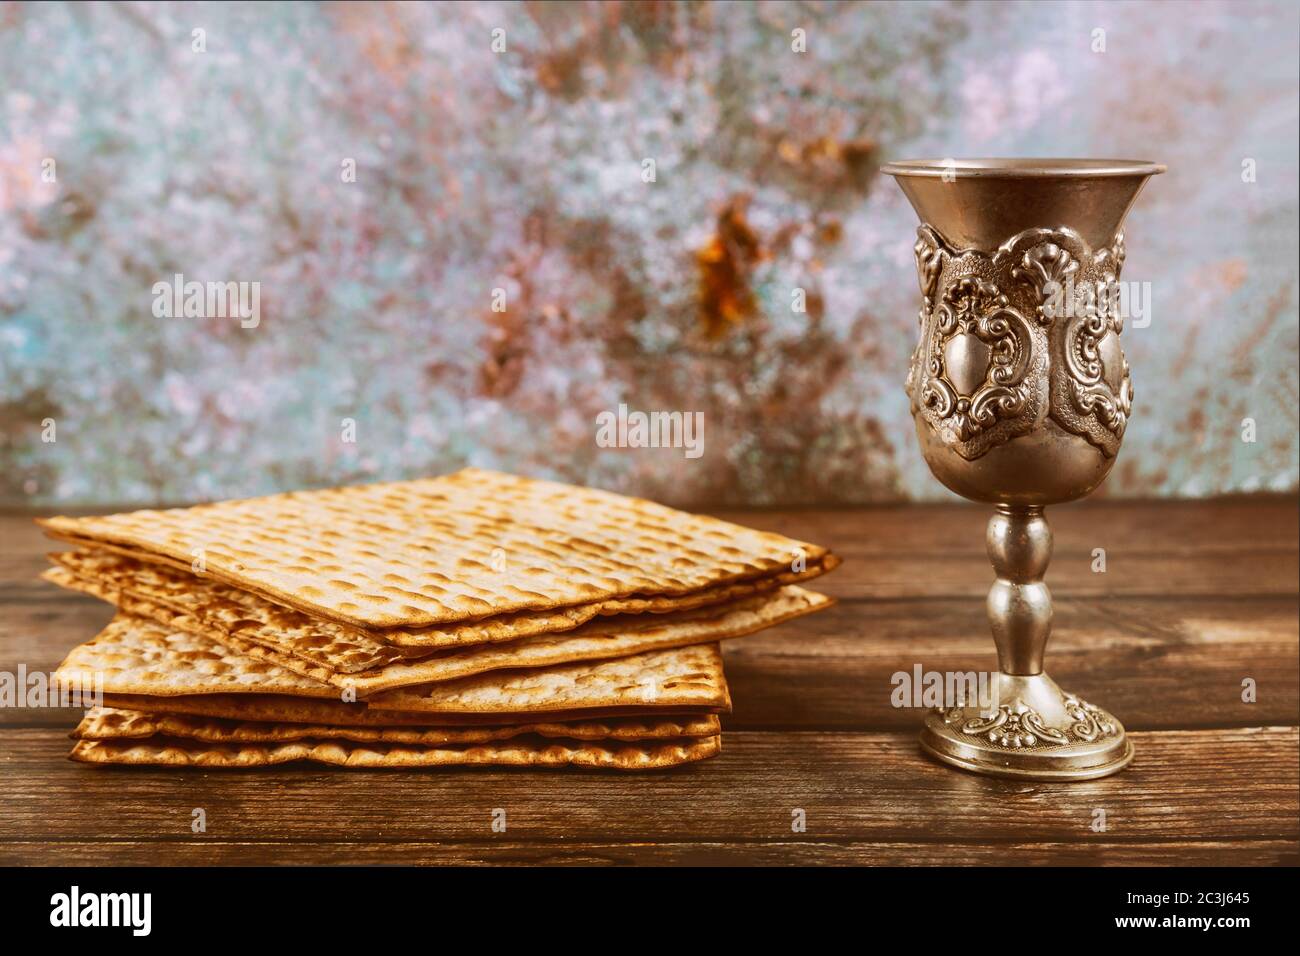 Matzos unleavened bread with kiddush cup of wine. Jewish pesah holiday. Stock Photo